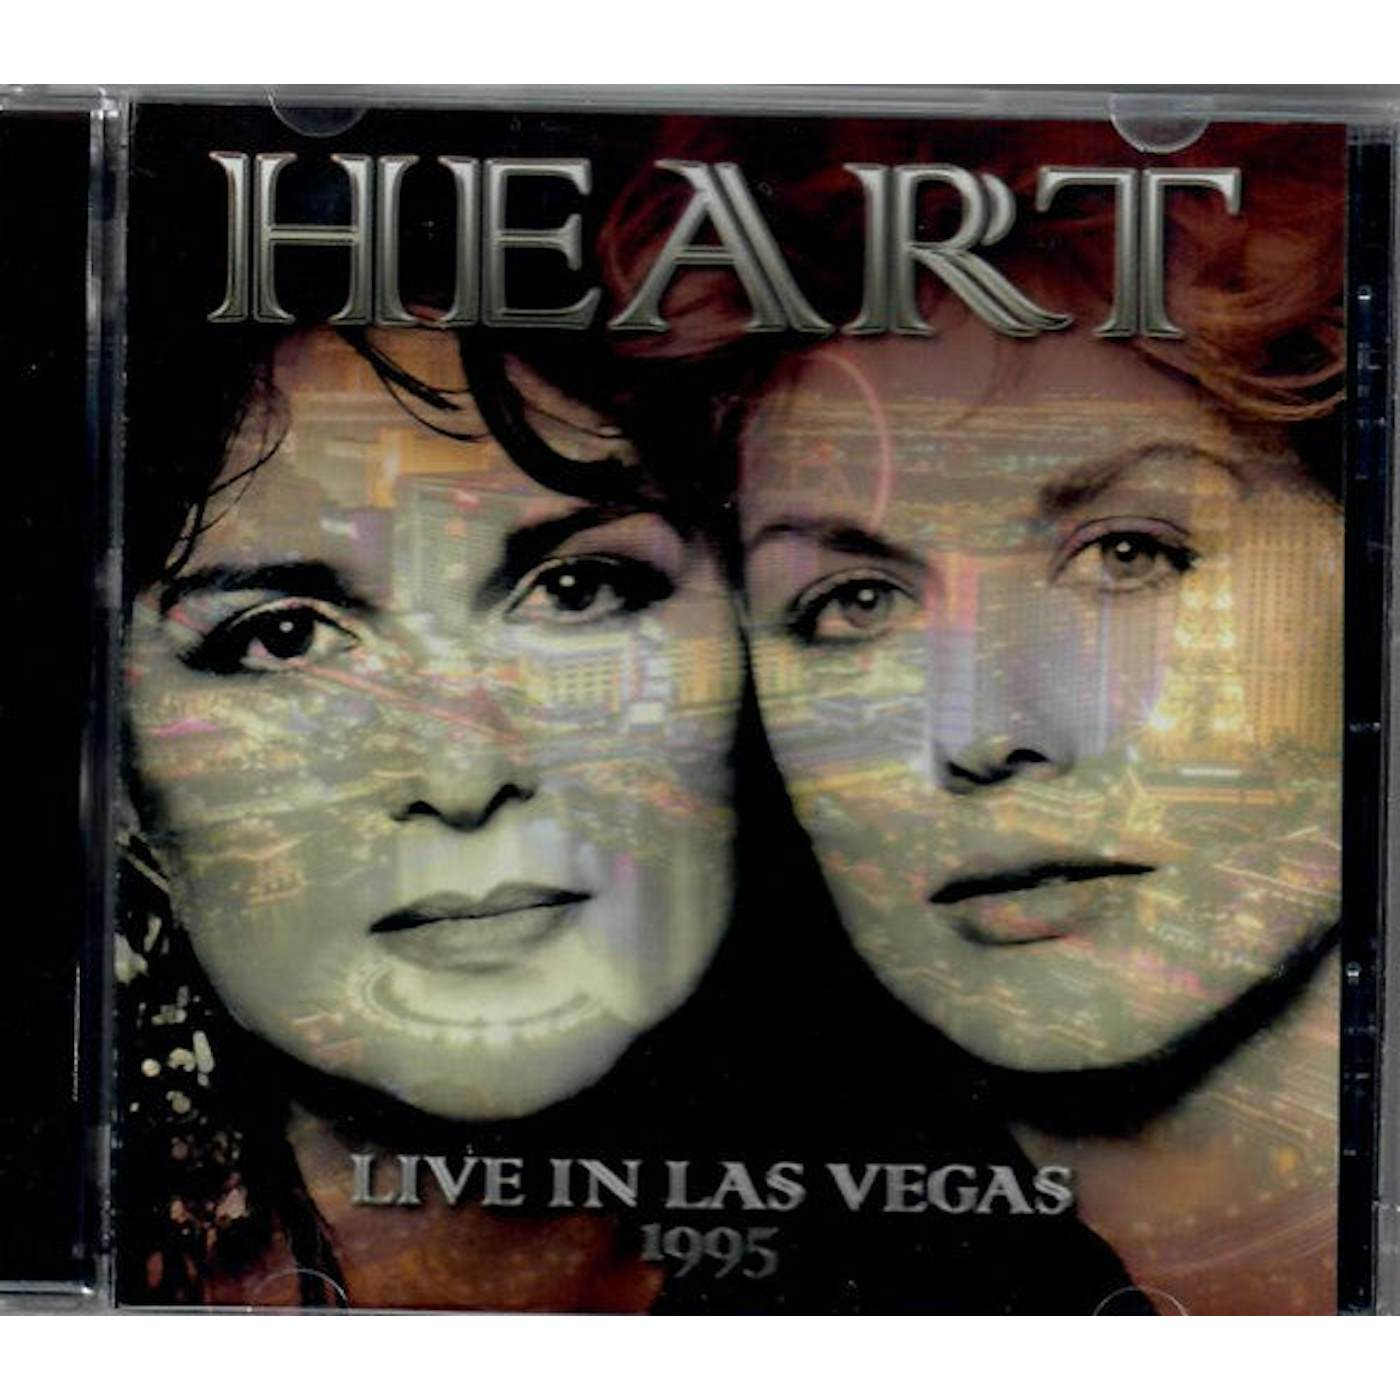 Heart LP Vinyl Record - Live In Las Vegas 19 95